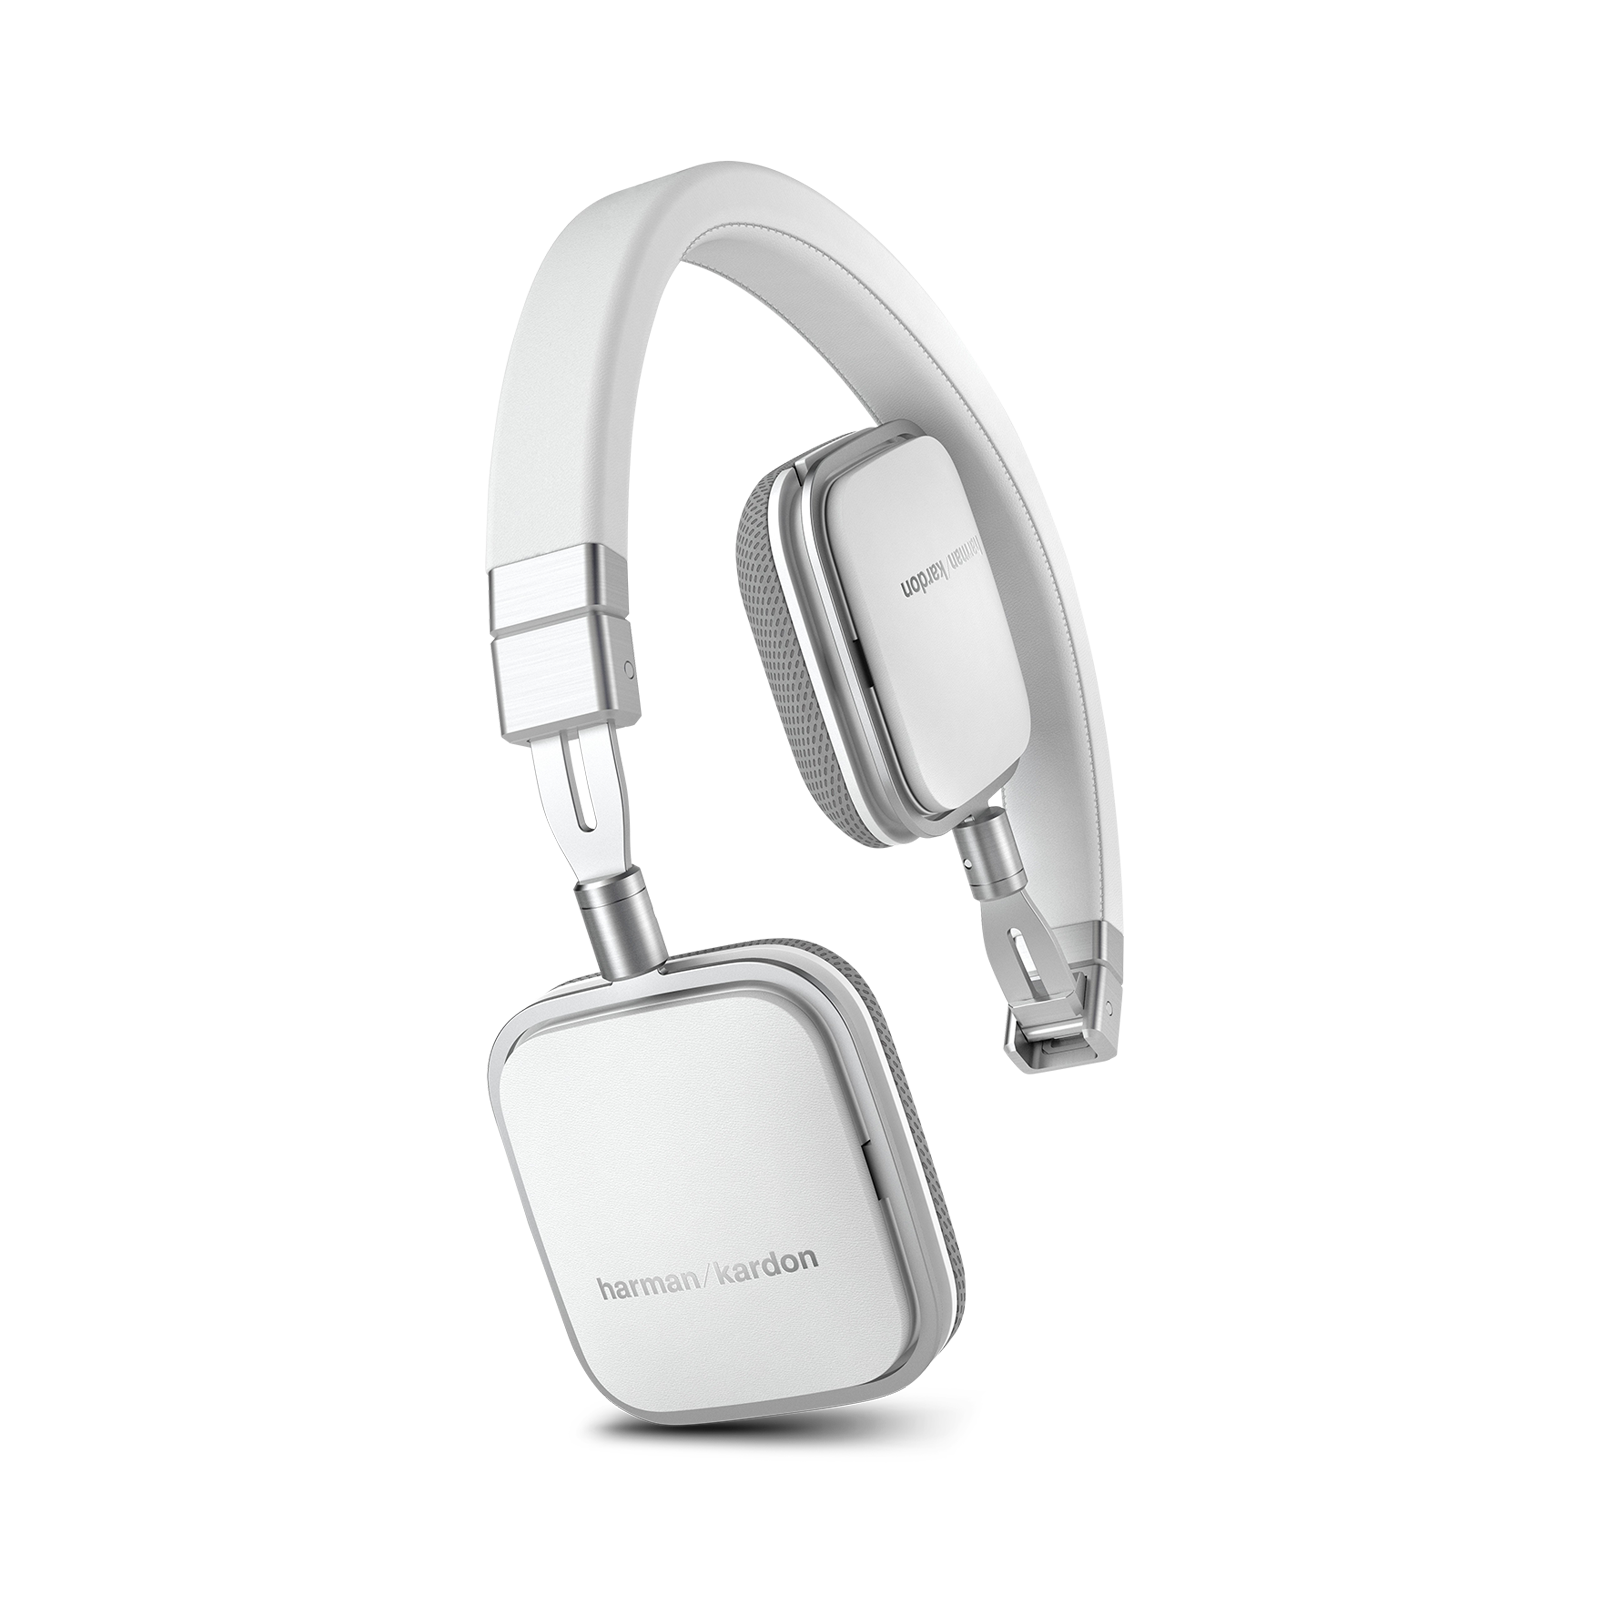 Soho-I - White - Premium, on-ear mini headphones with iOS device compatible remote - Detailshot 1